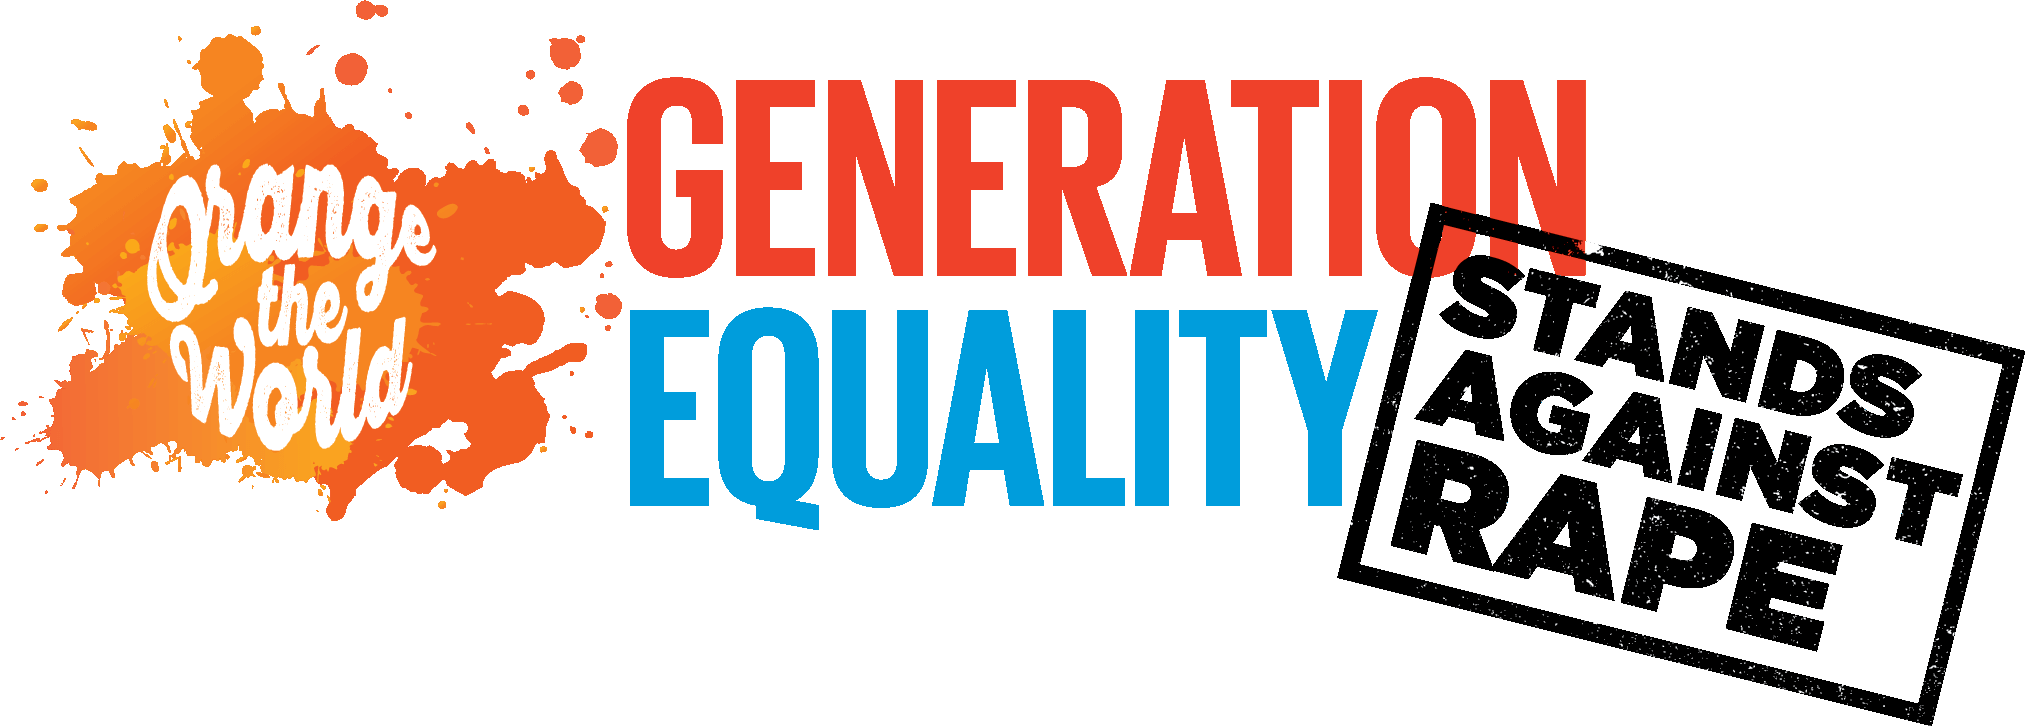 16 Days 2019 Logo Generation Equality Stands Against Rape Horizontal En